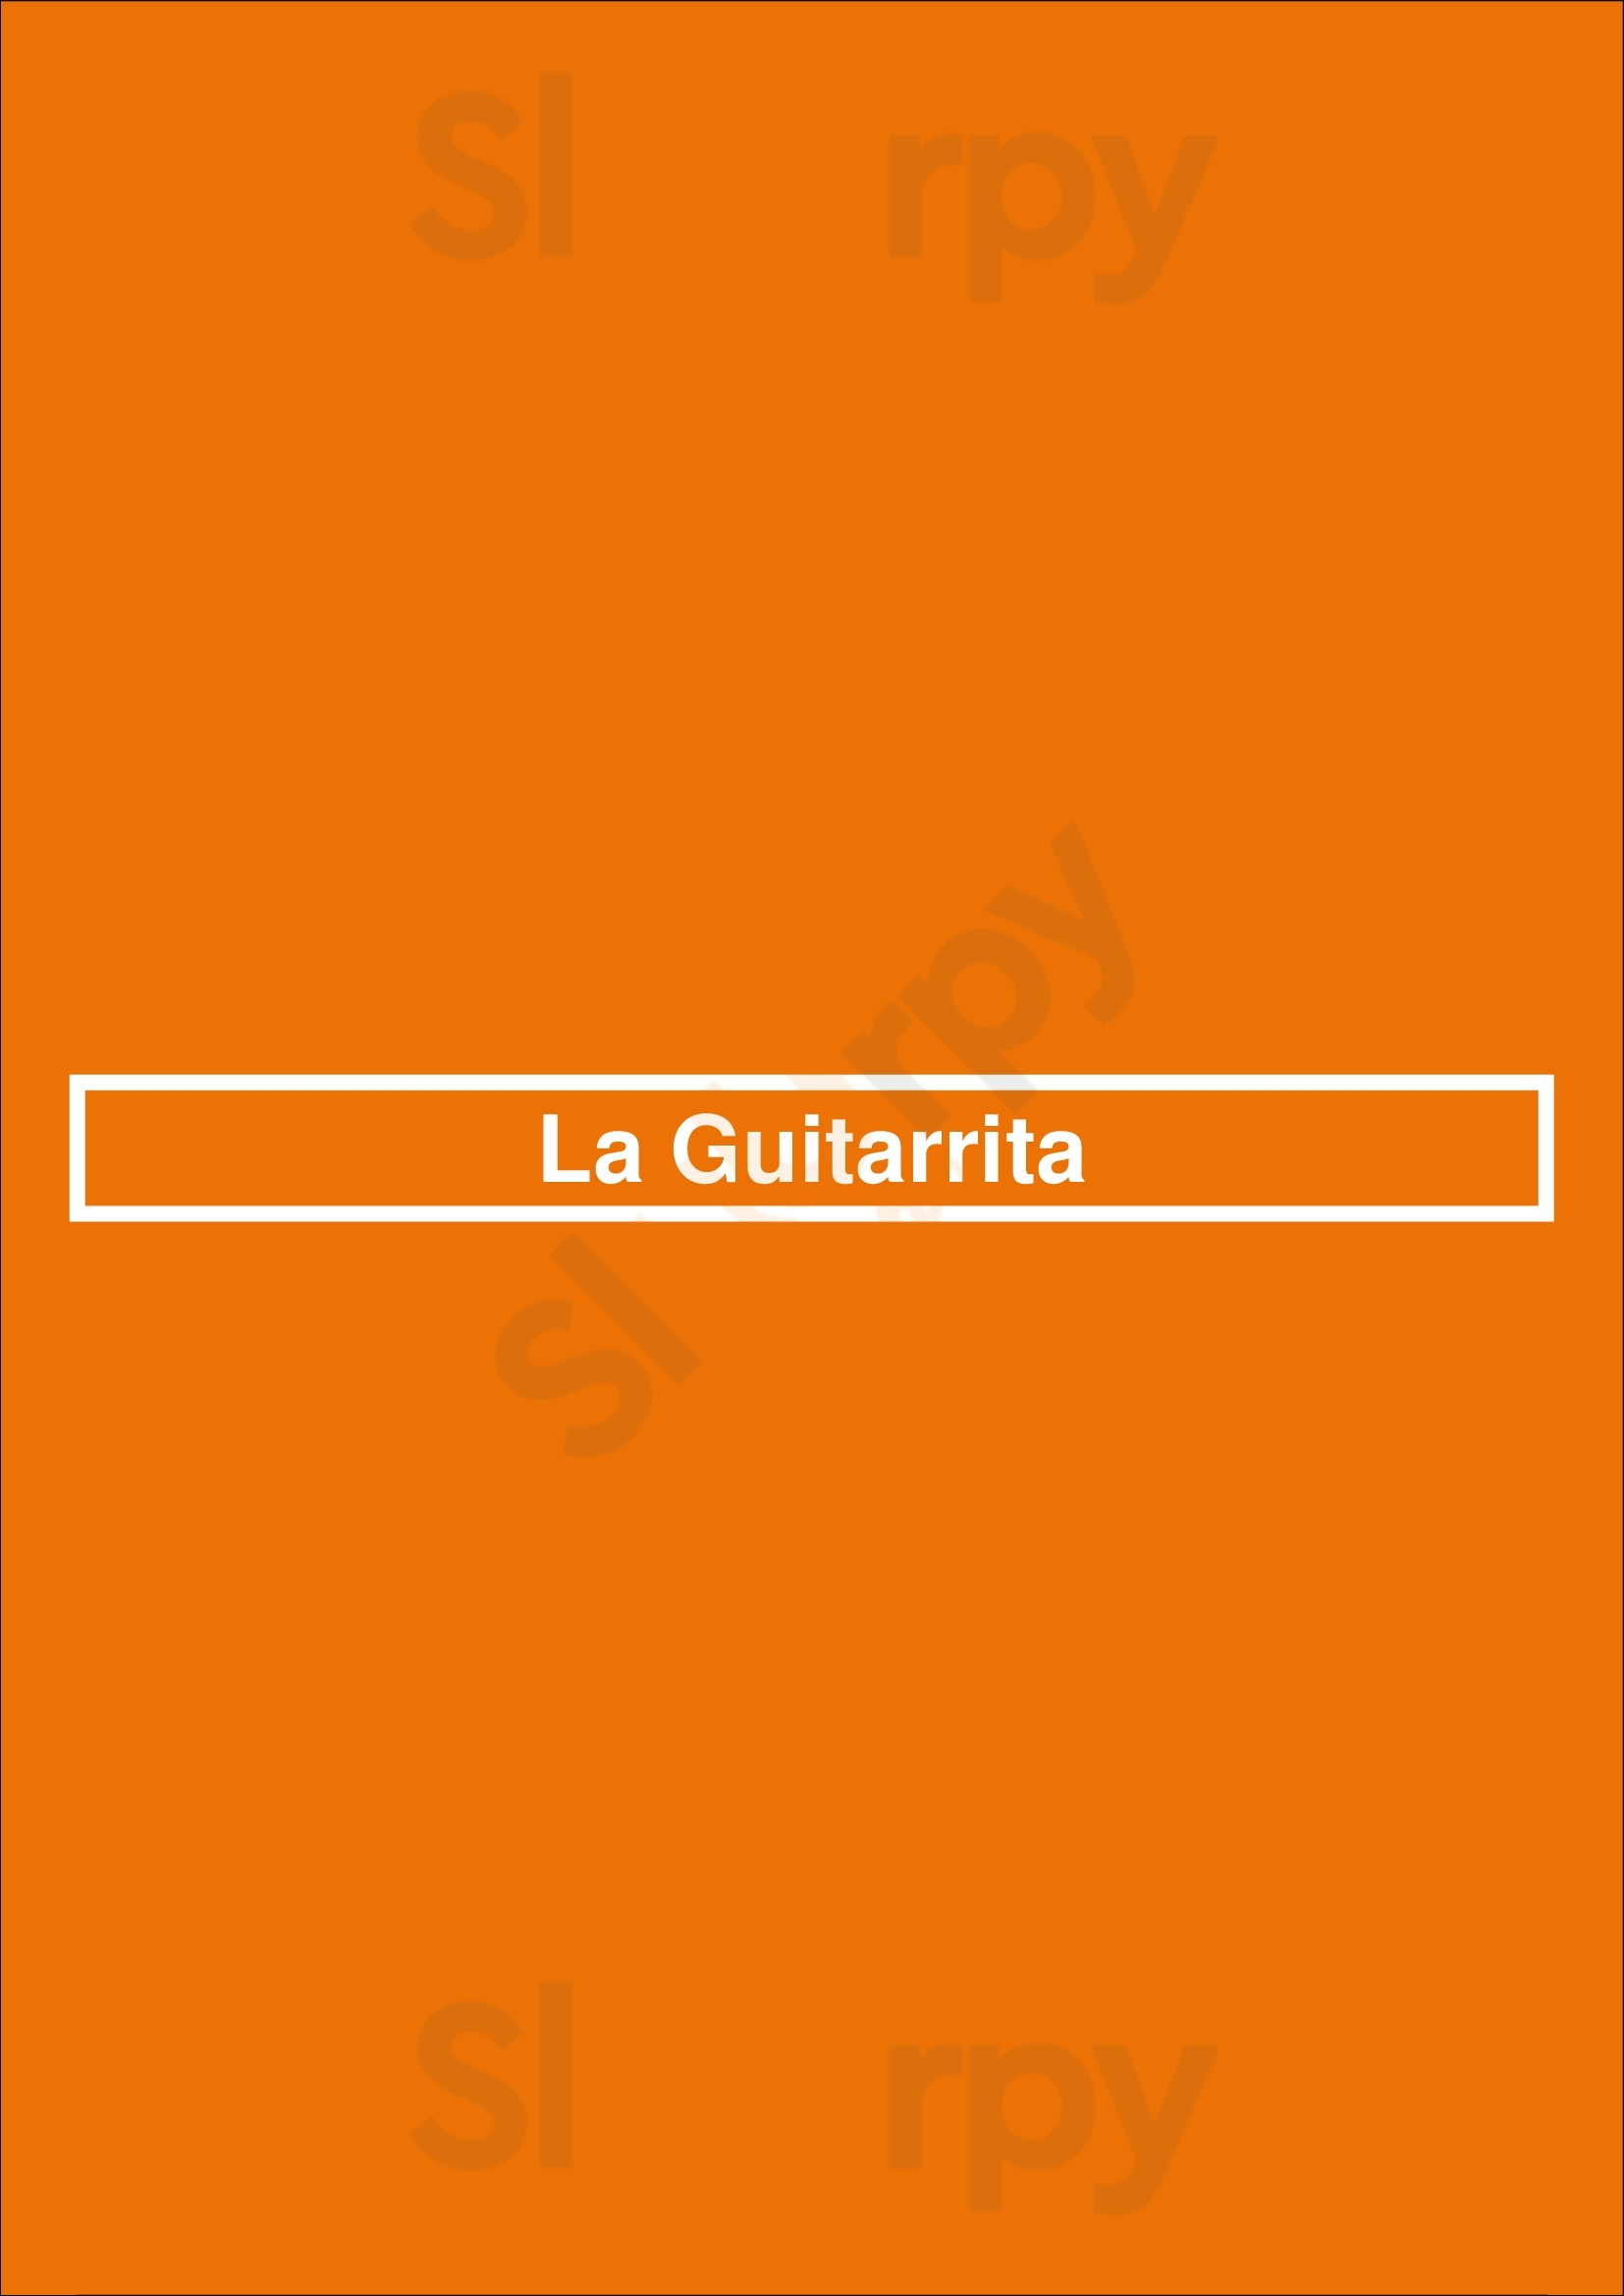 La Guitarrita Buenos Aires Menu - 1